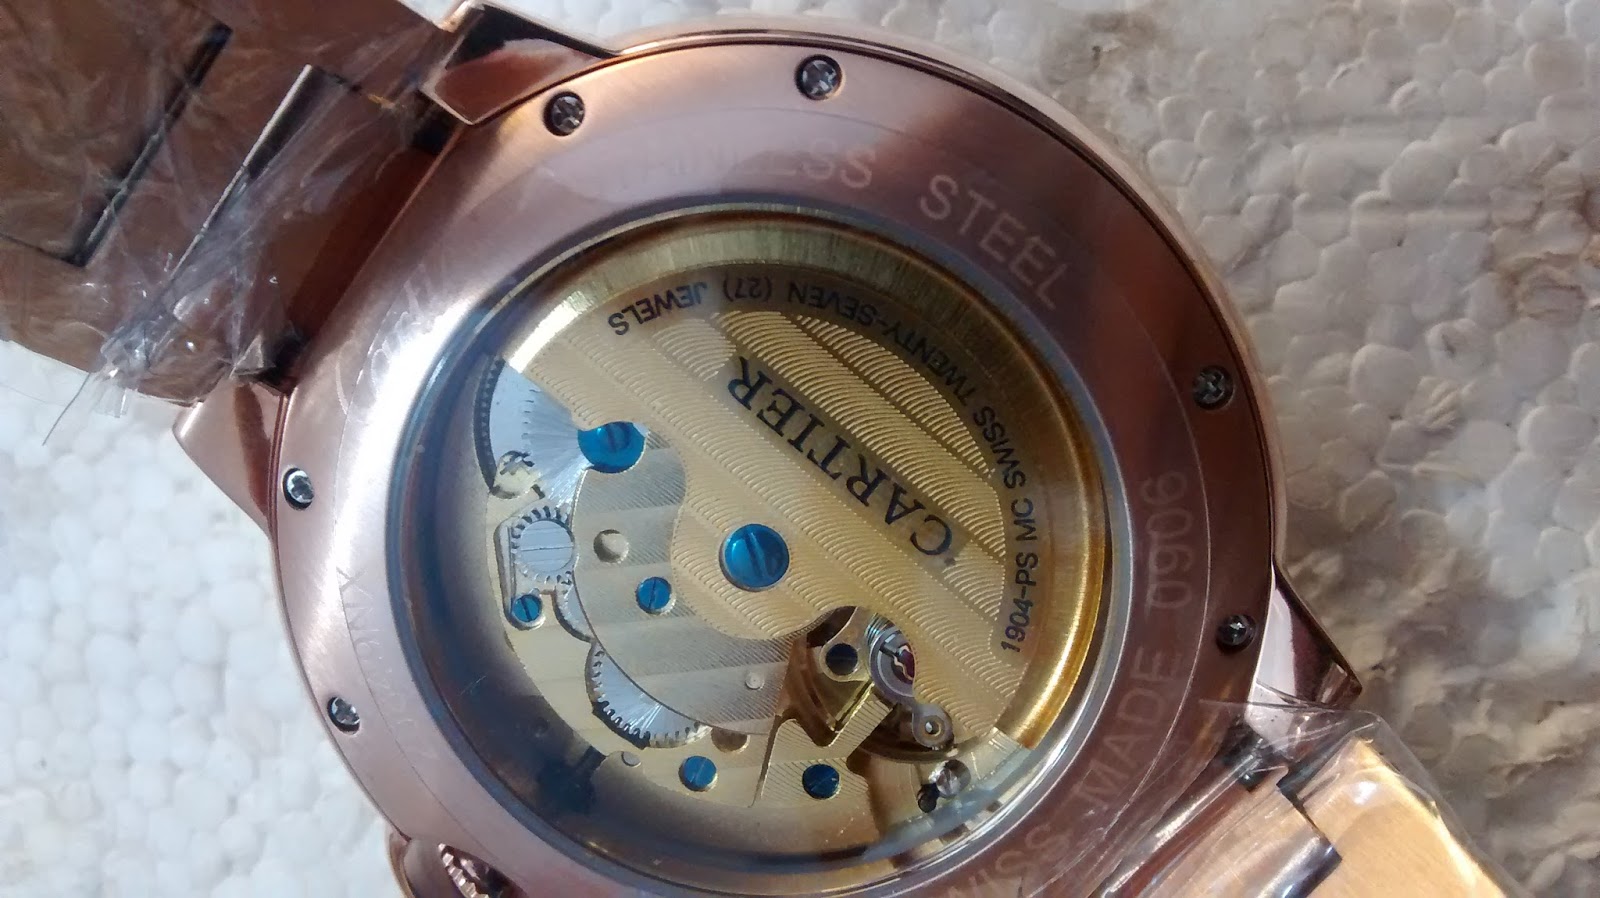 cartier automatic pendulum watch